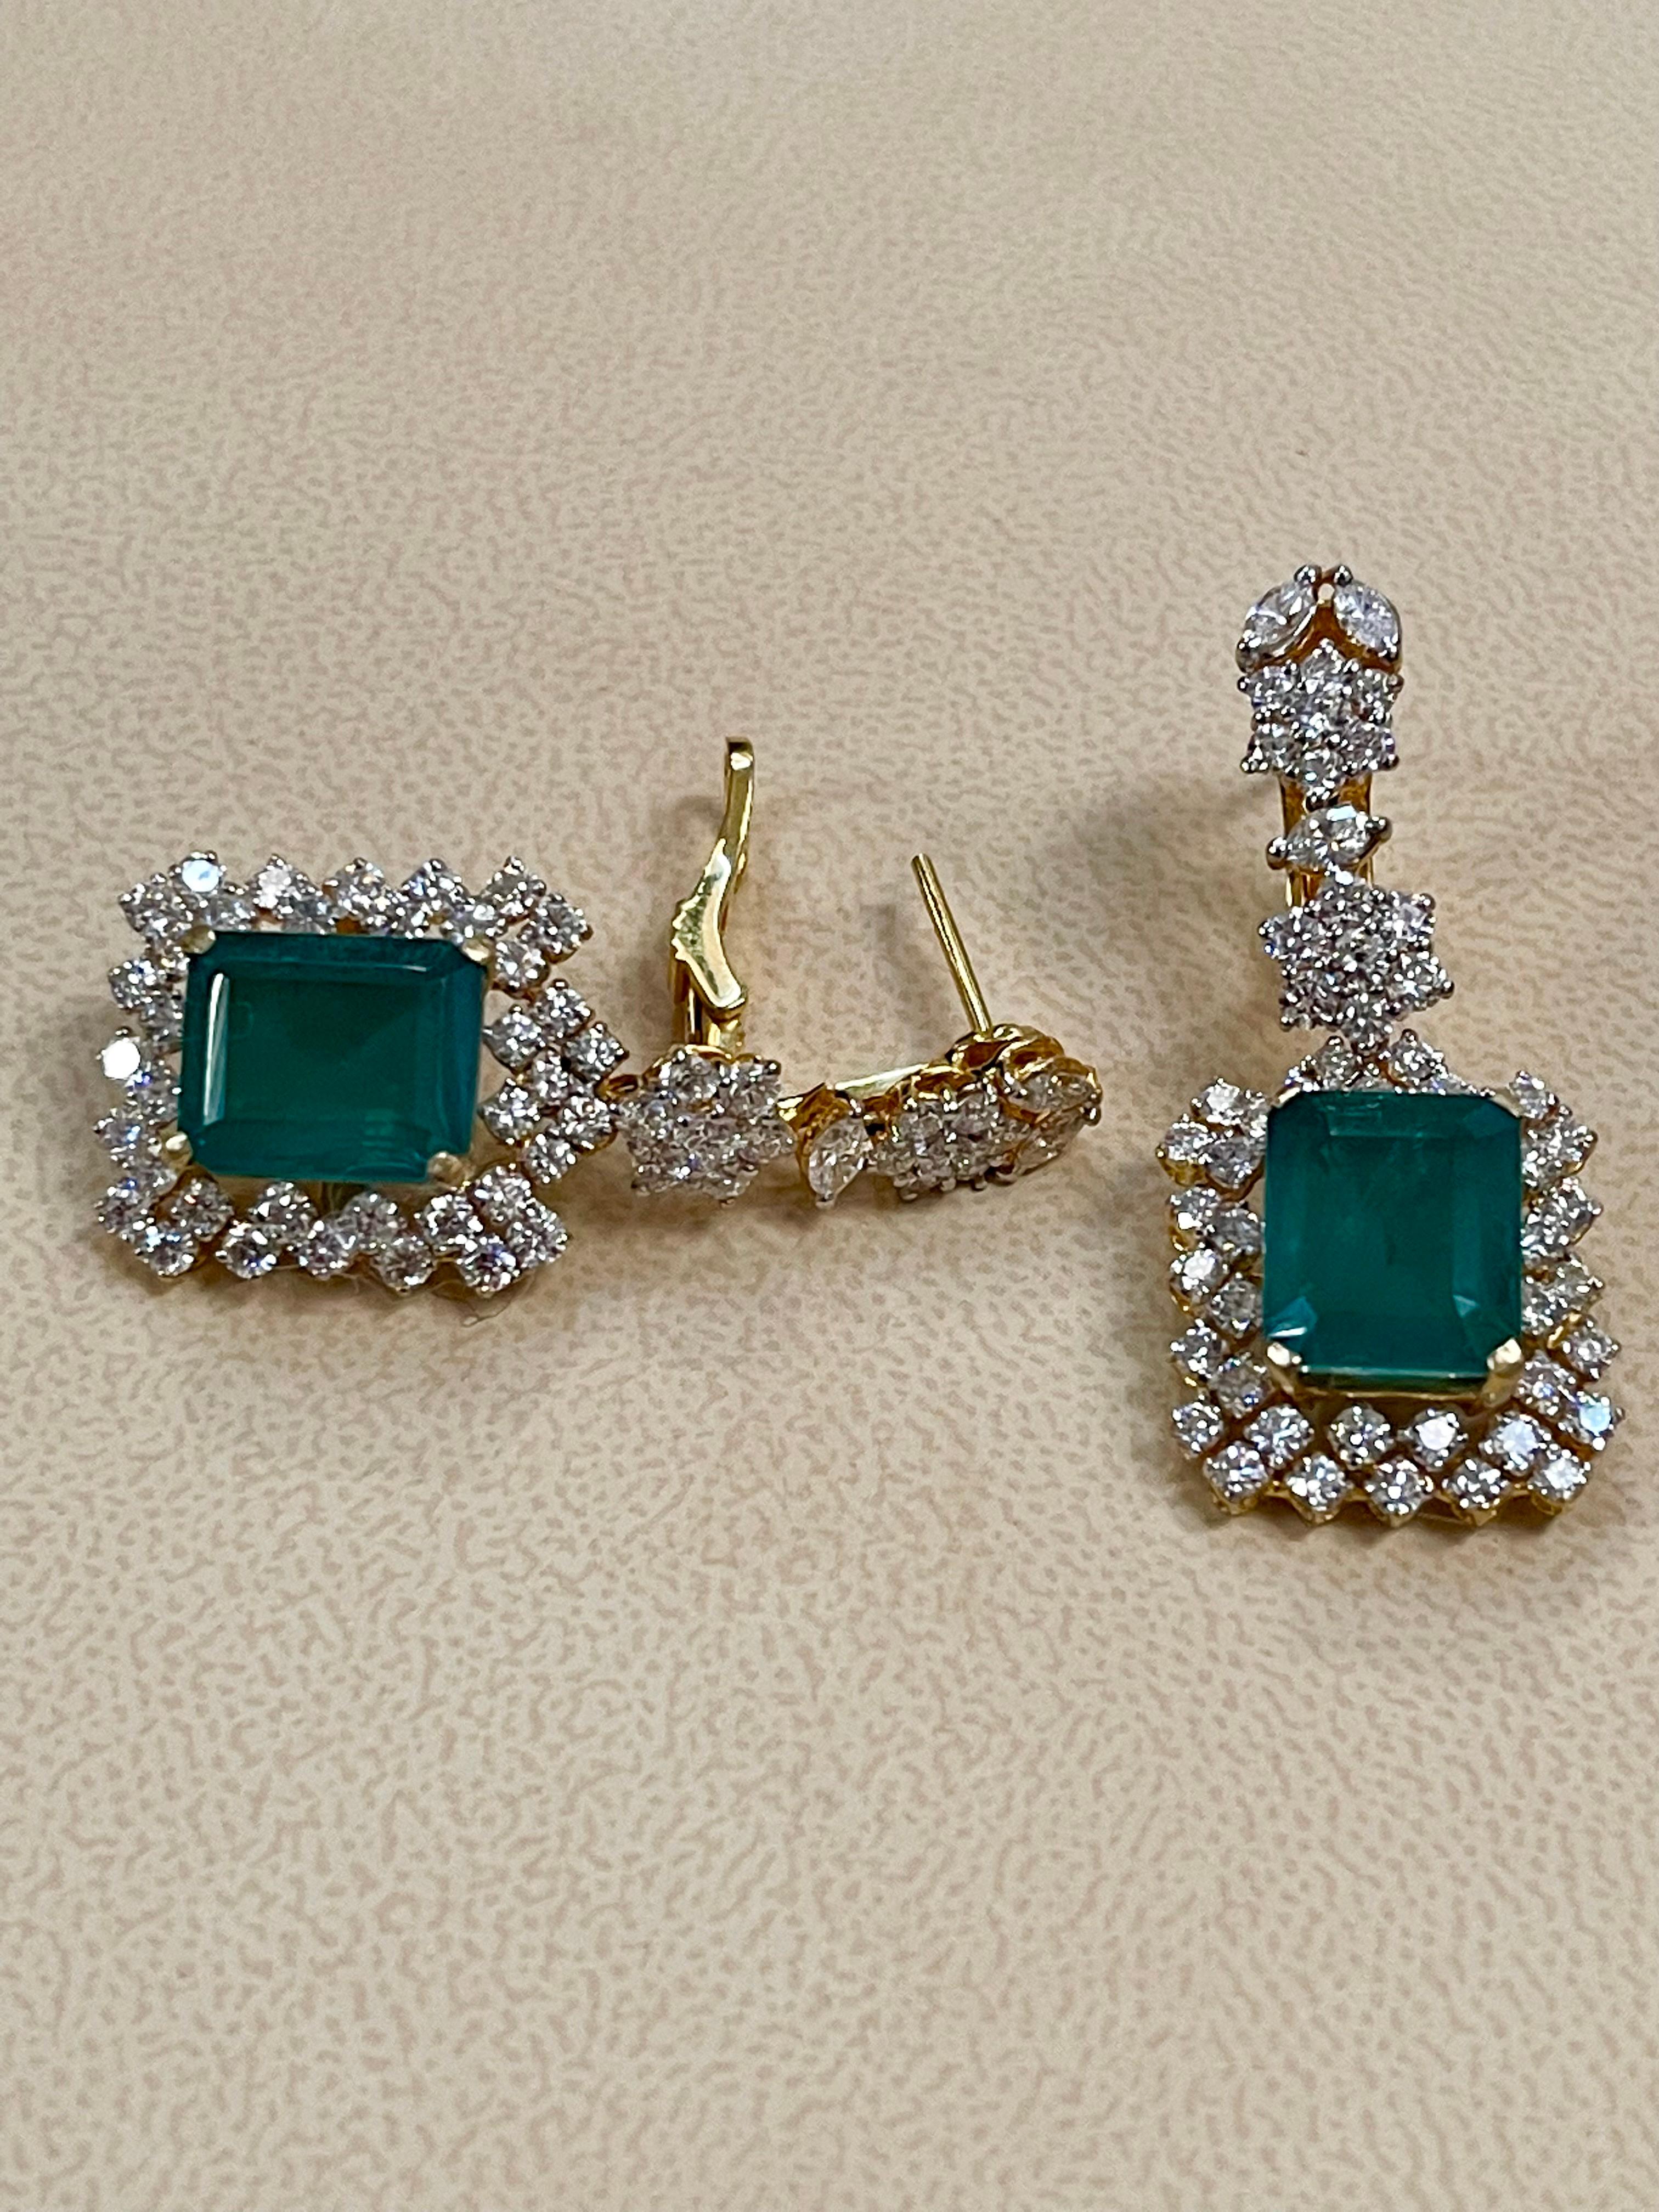 Hydro Emerald Cut Emerald, 7Ct VS Diamond Dangle/Drop Earrings 18 Kt Gold For Sale 10